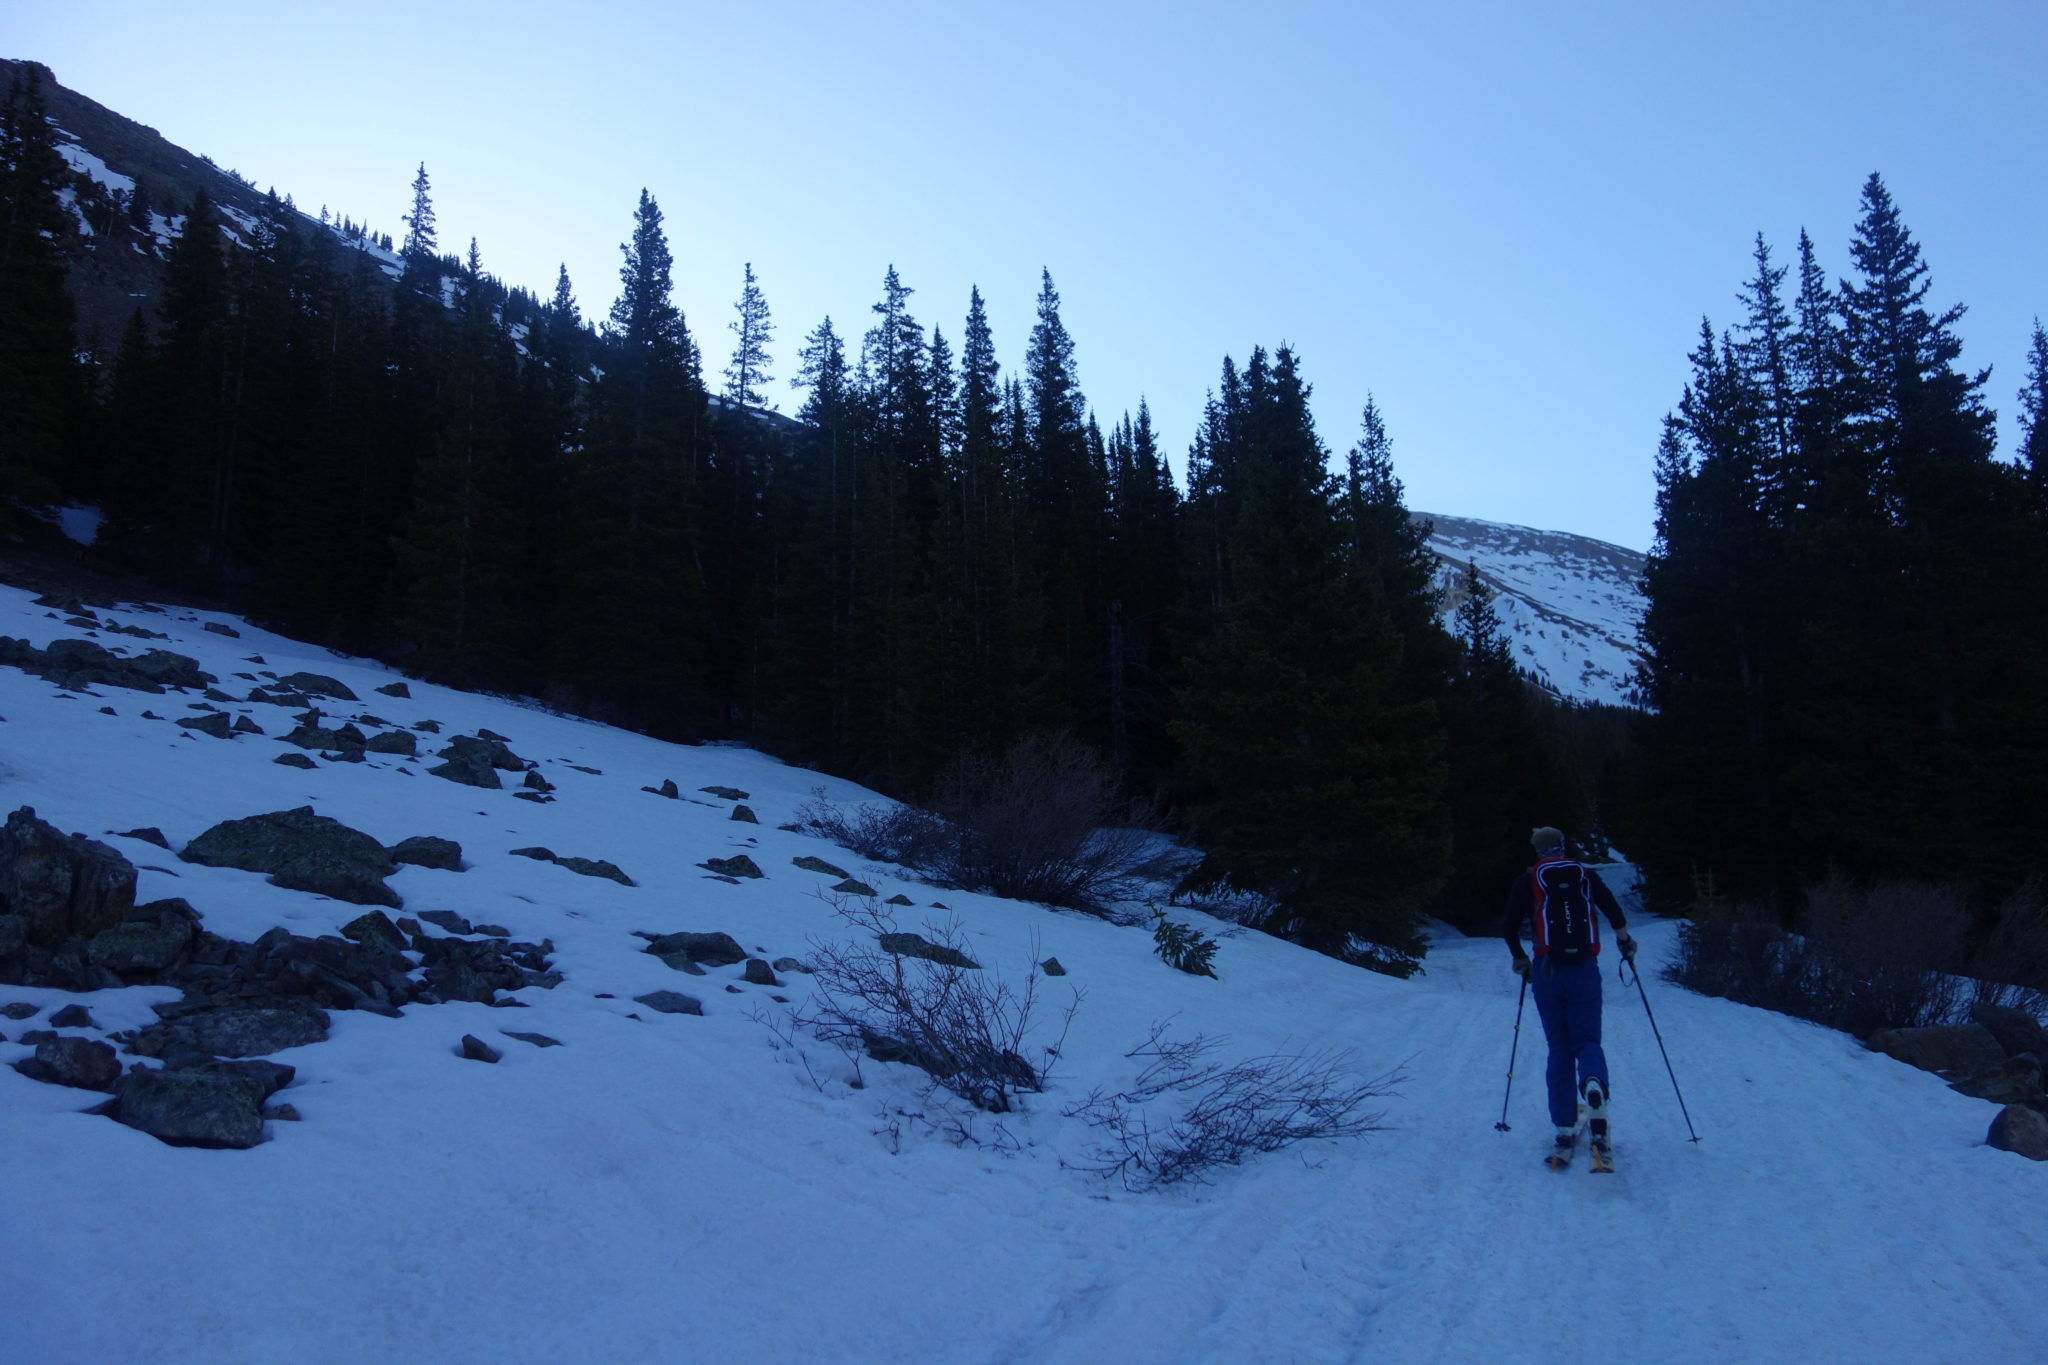 Southwest Gullies Rockies Peak Fe - the | Santa Exploring Ski